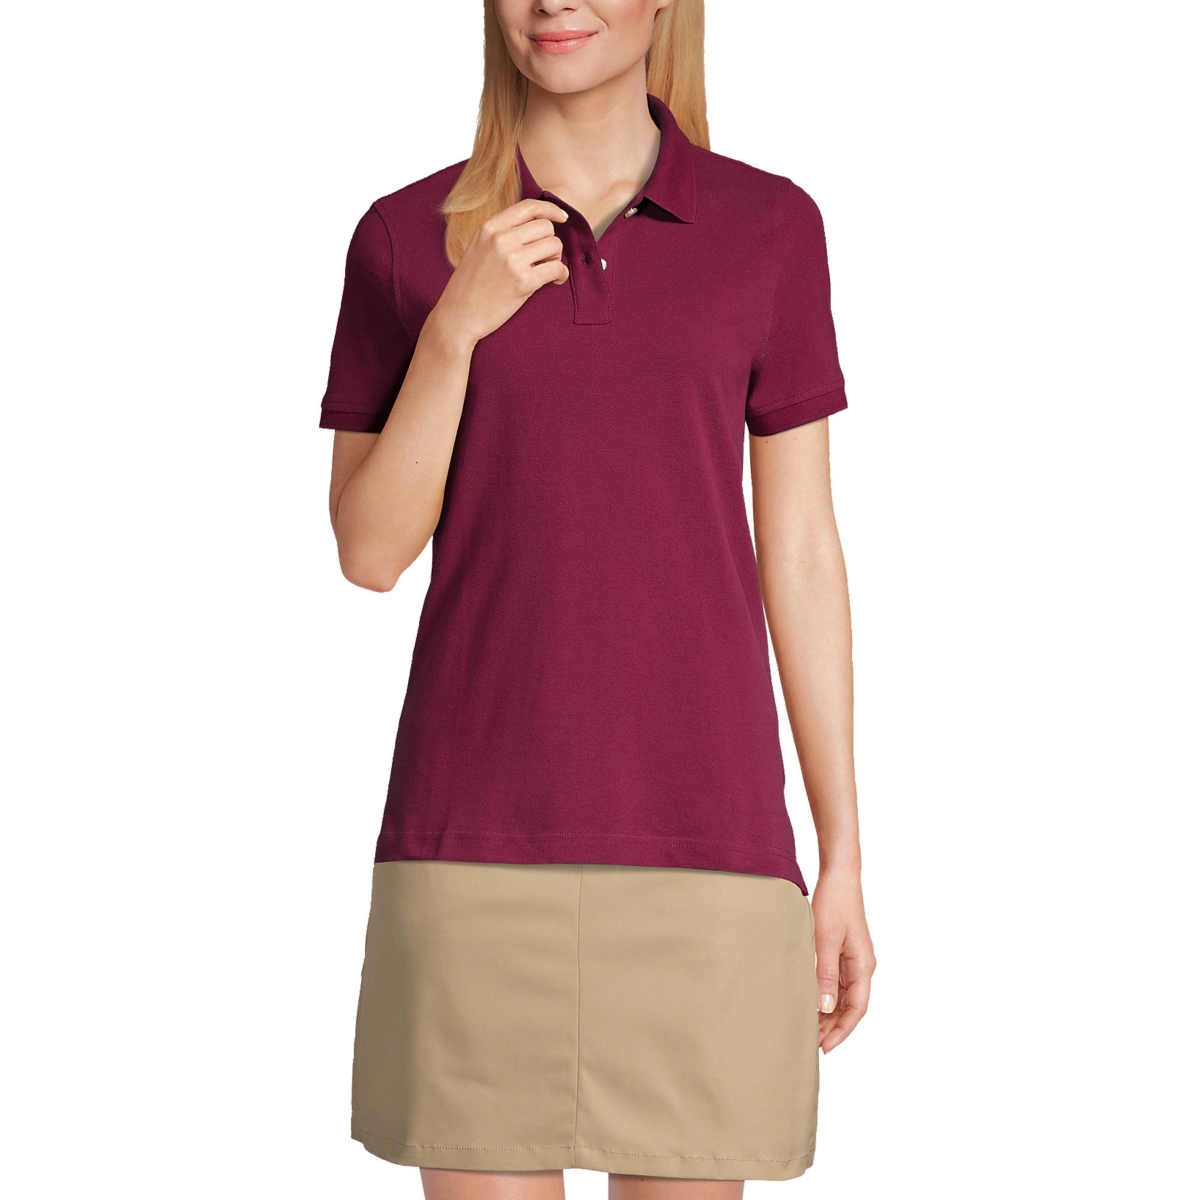 Women's Long Sleeve Feminine Fit Interlock Polo Shirt